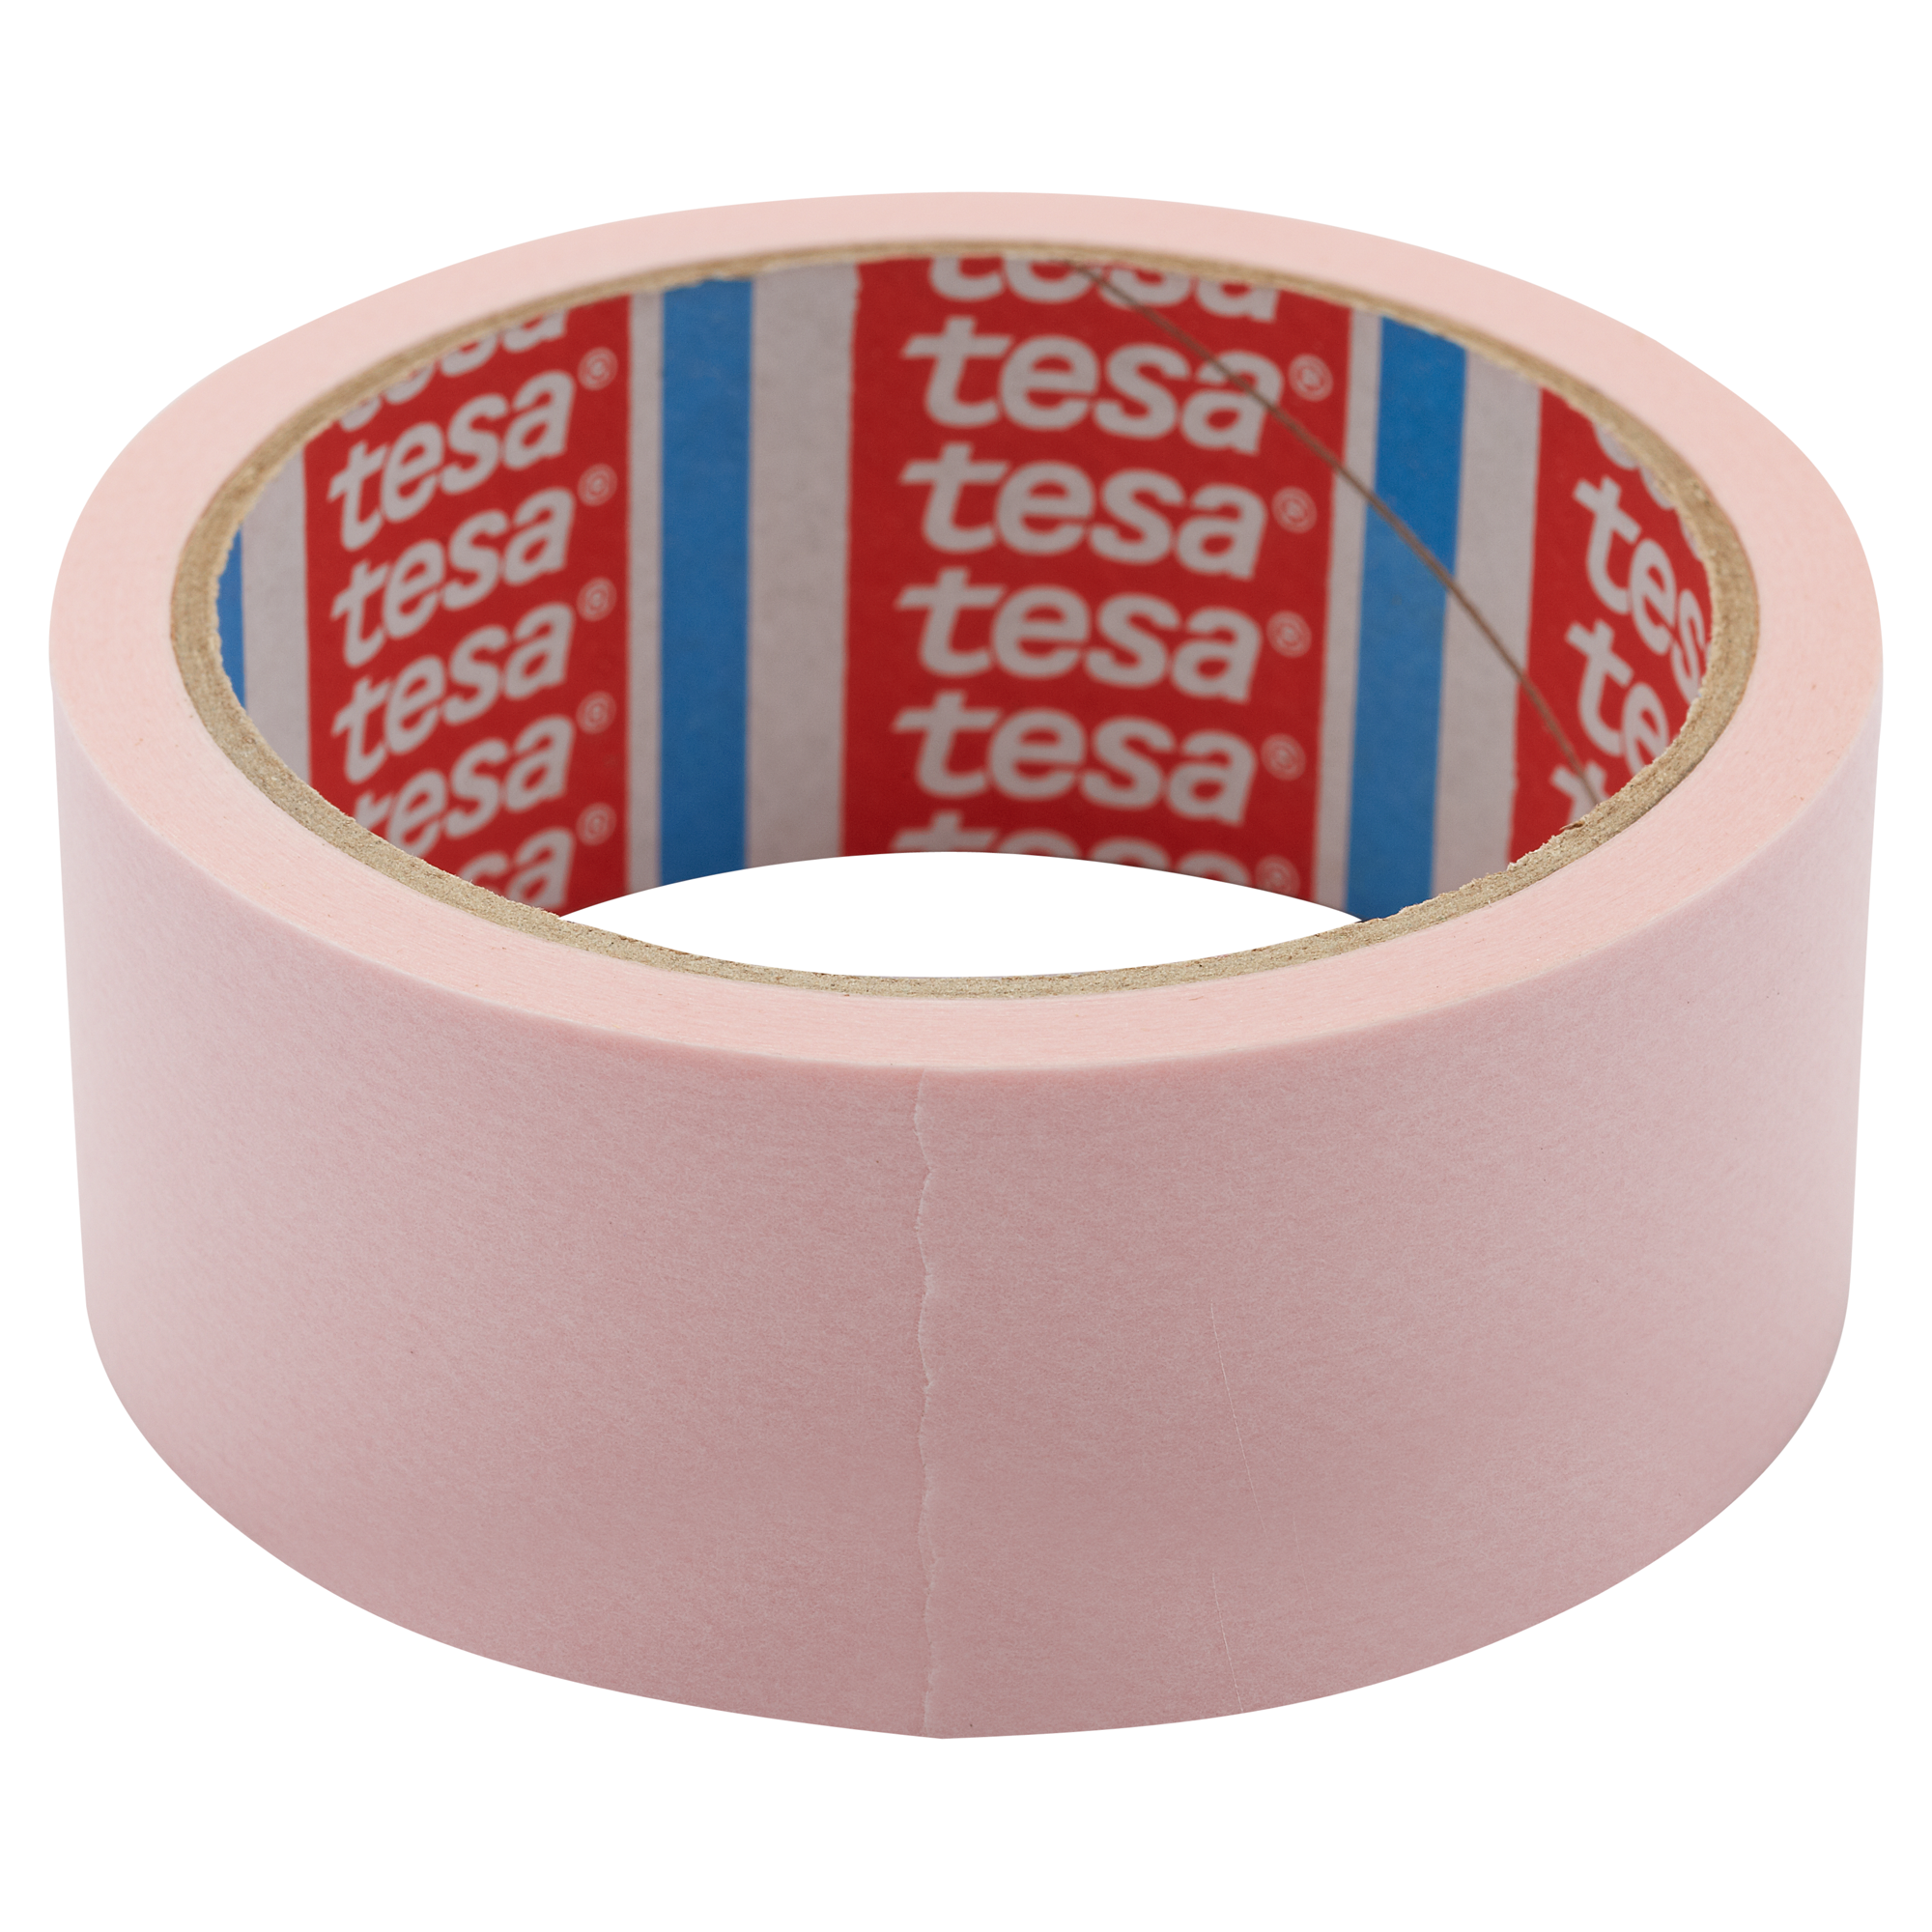 Tesa Malerband "Tapeten" 25 m rosa + product picture